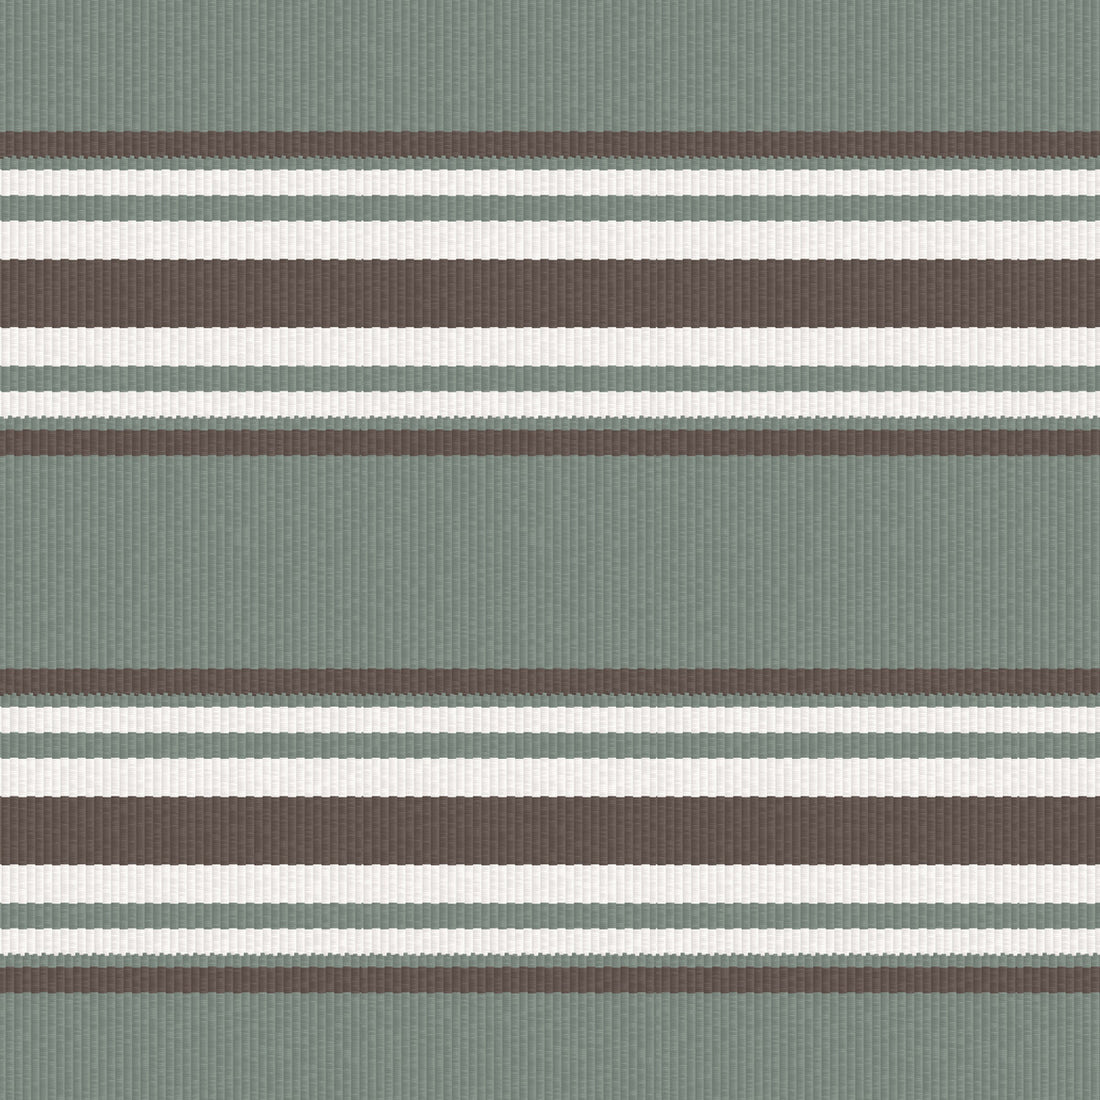 Pinilla fabric in verde/marron color - pattern LCT5463.002.0 - by Gaston y Daniela in the Lorenzo Castillo IV collection